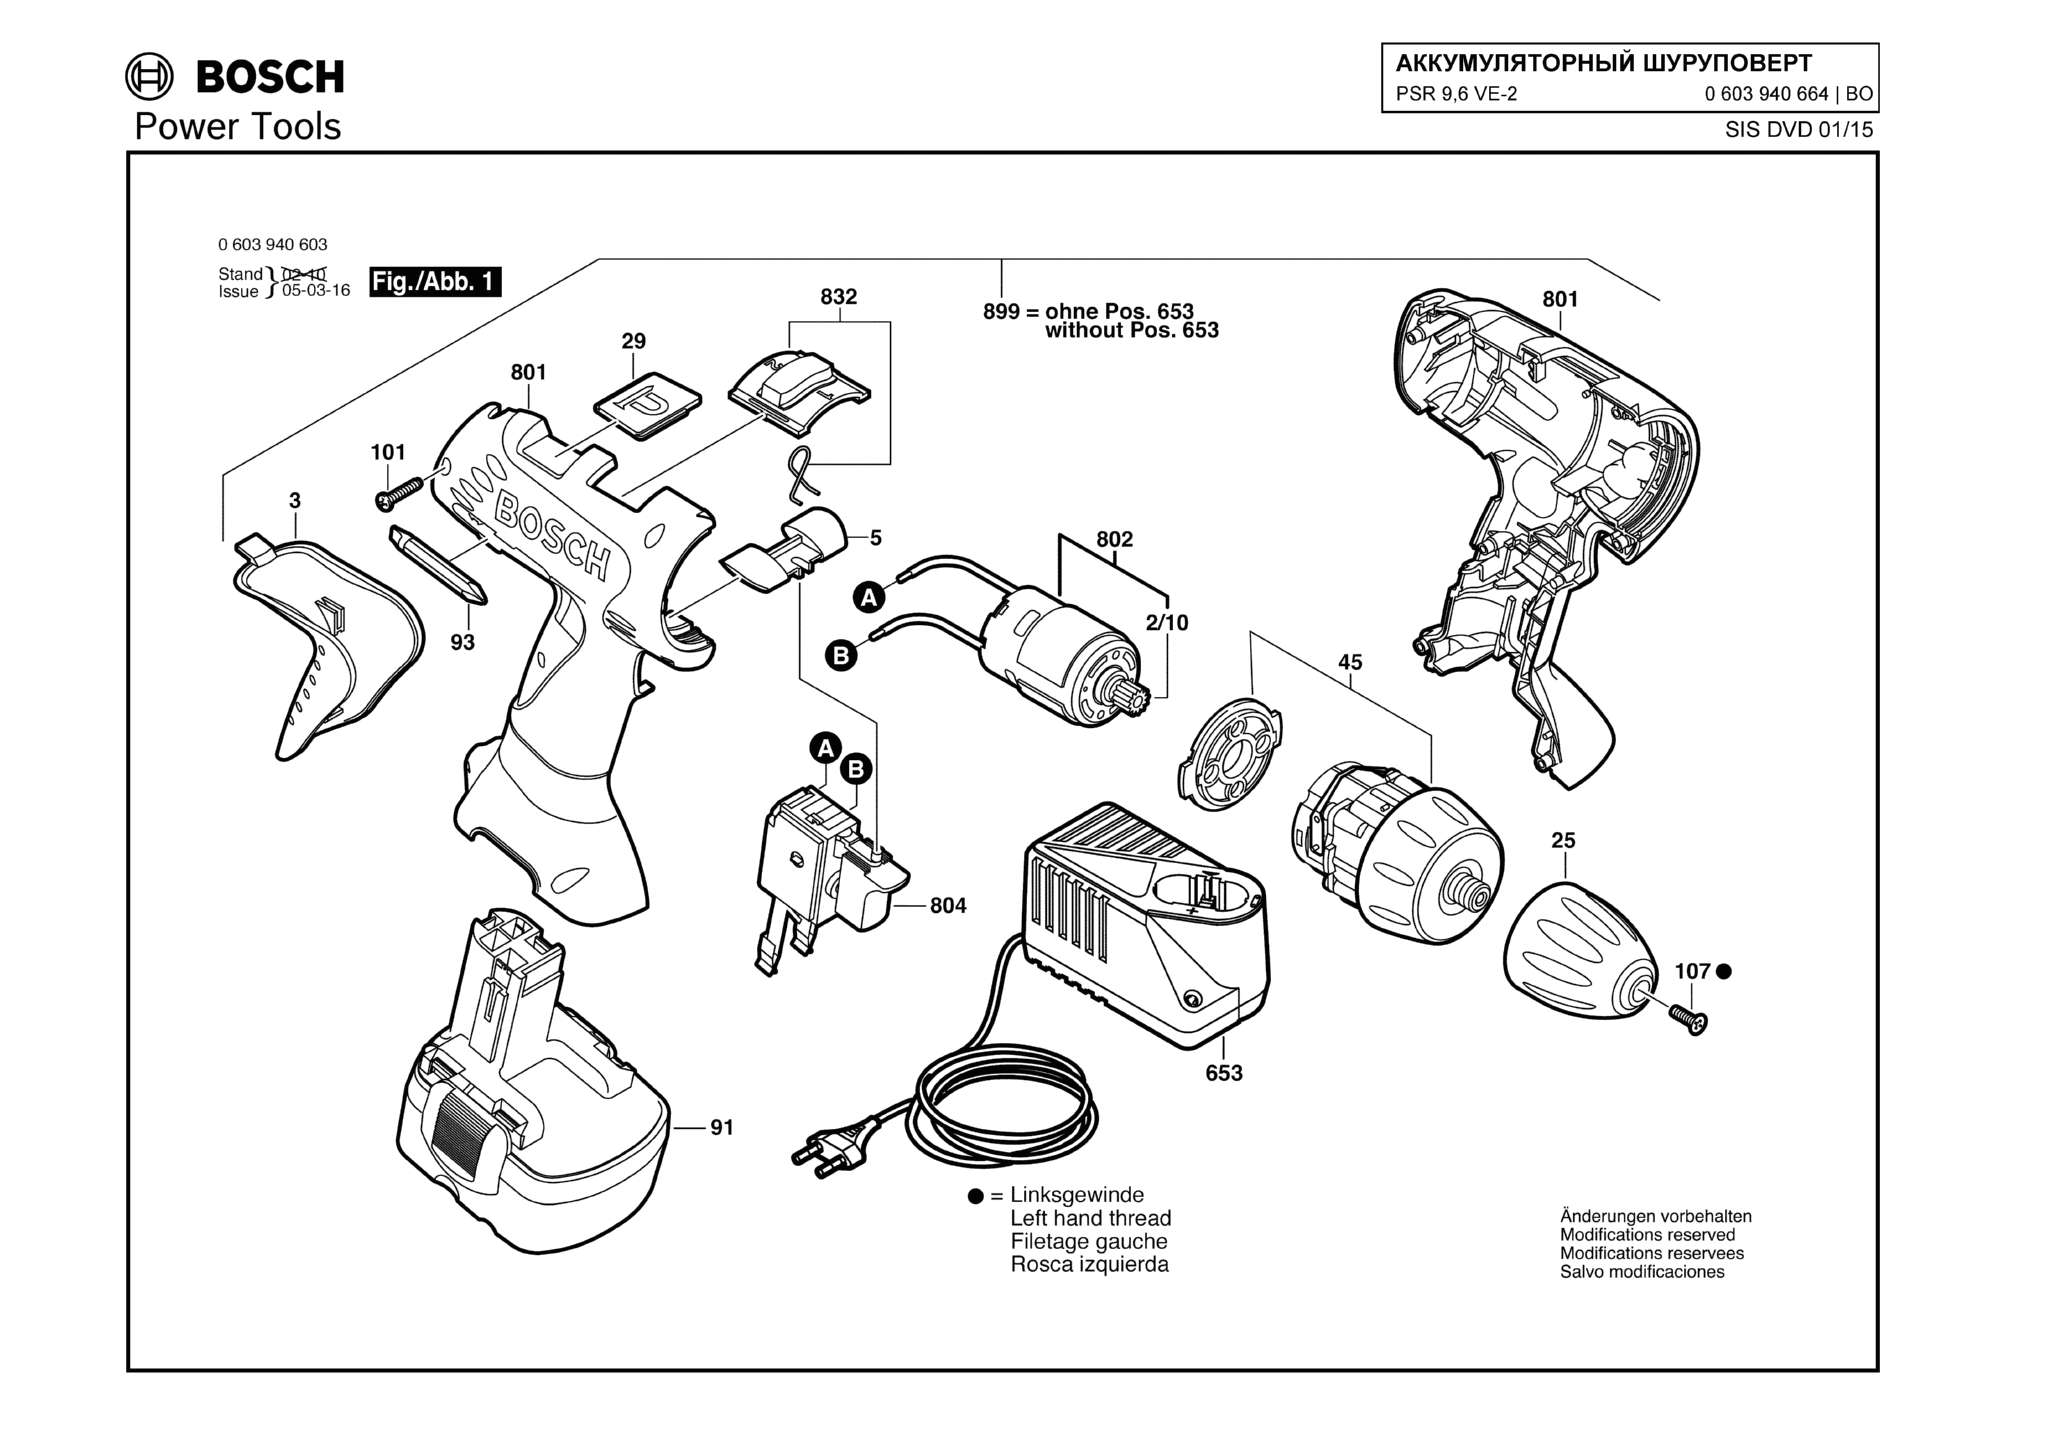 Запчасти, схема и деталировка Bosch PSR 9,6 VE-2 (ТИП 0603940664)